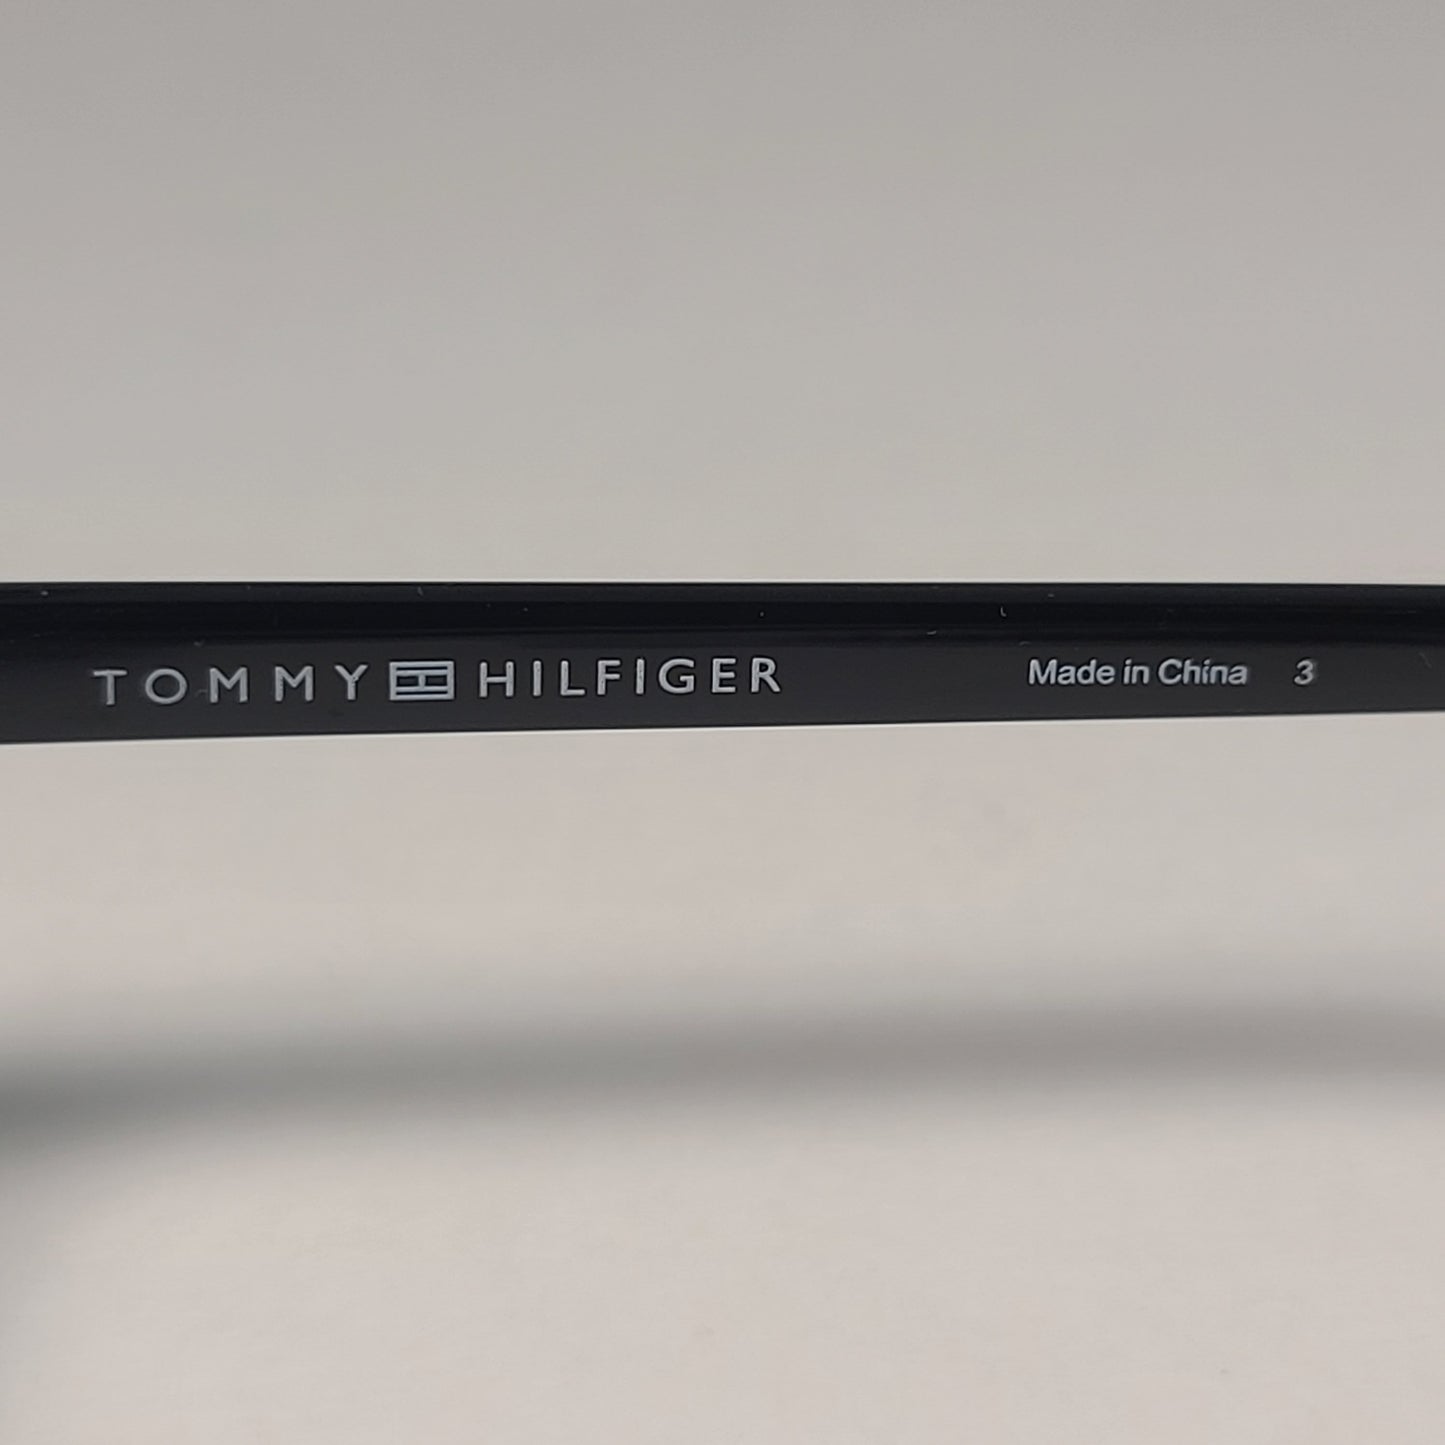 Tommy Hilfiger "Liz" WP OL573 Cat Eye Sunglasses Shiny Black Frame Gray Lens